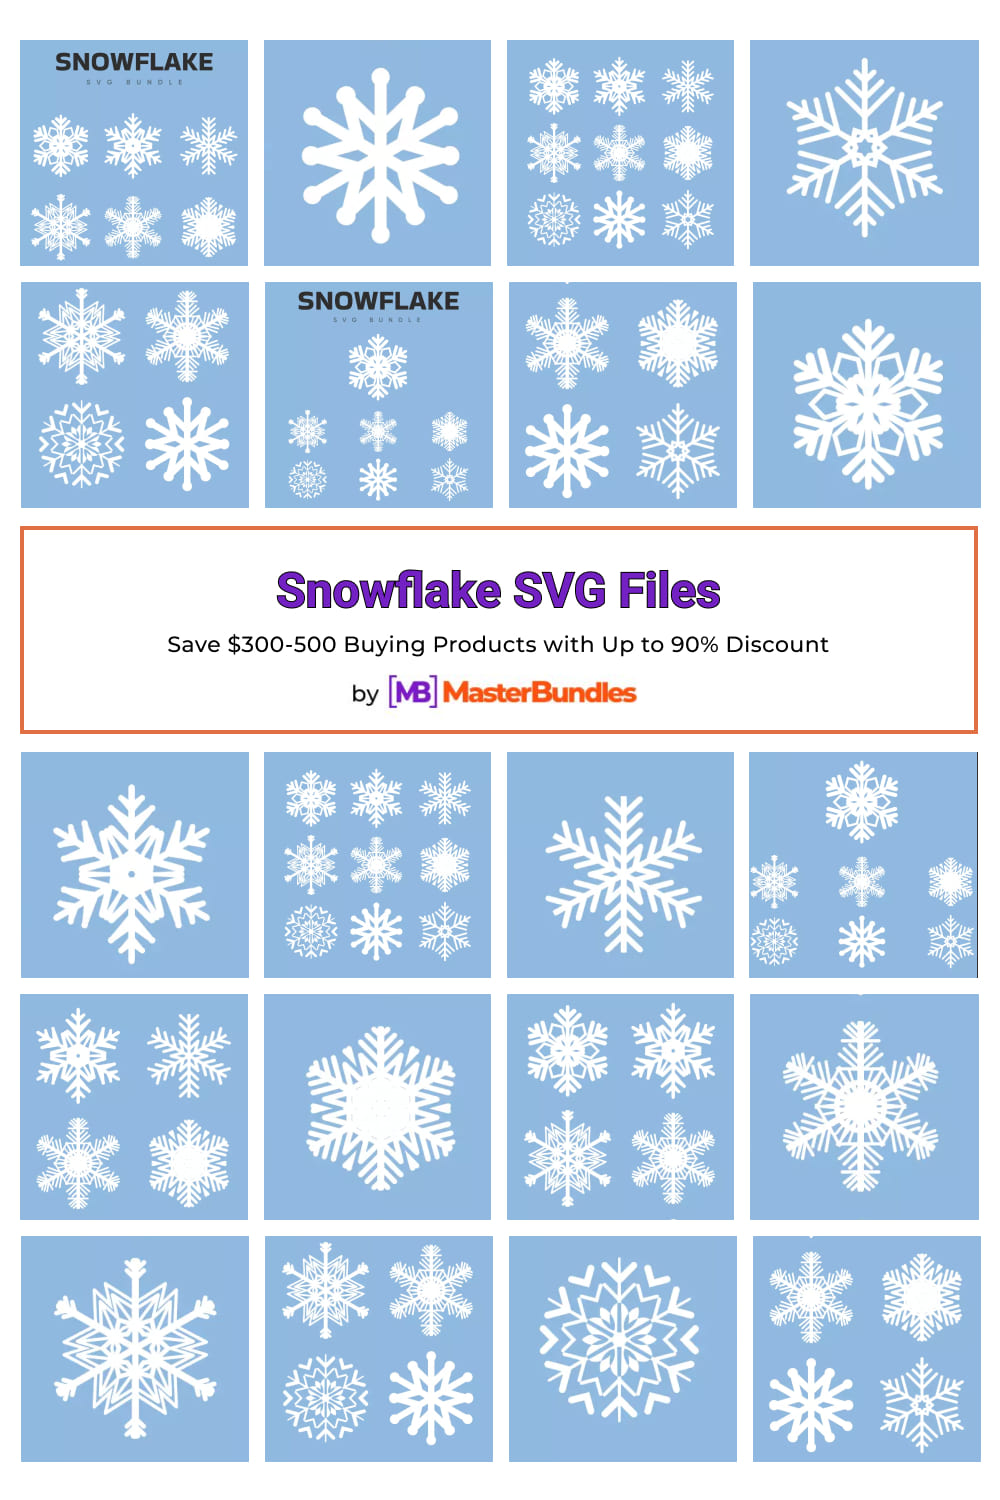 Snowflake SVG Files for pinterest.